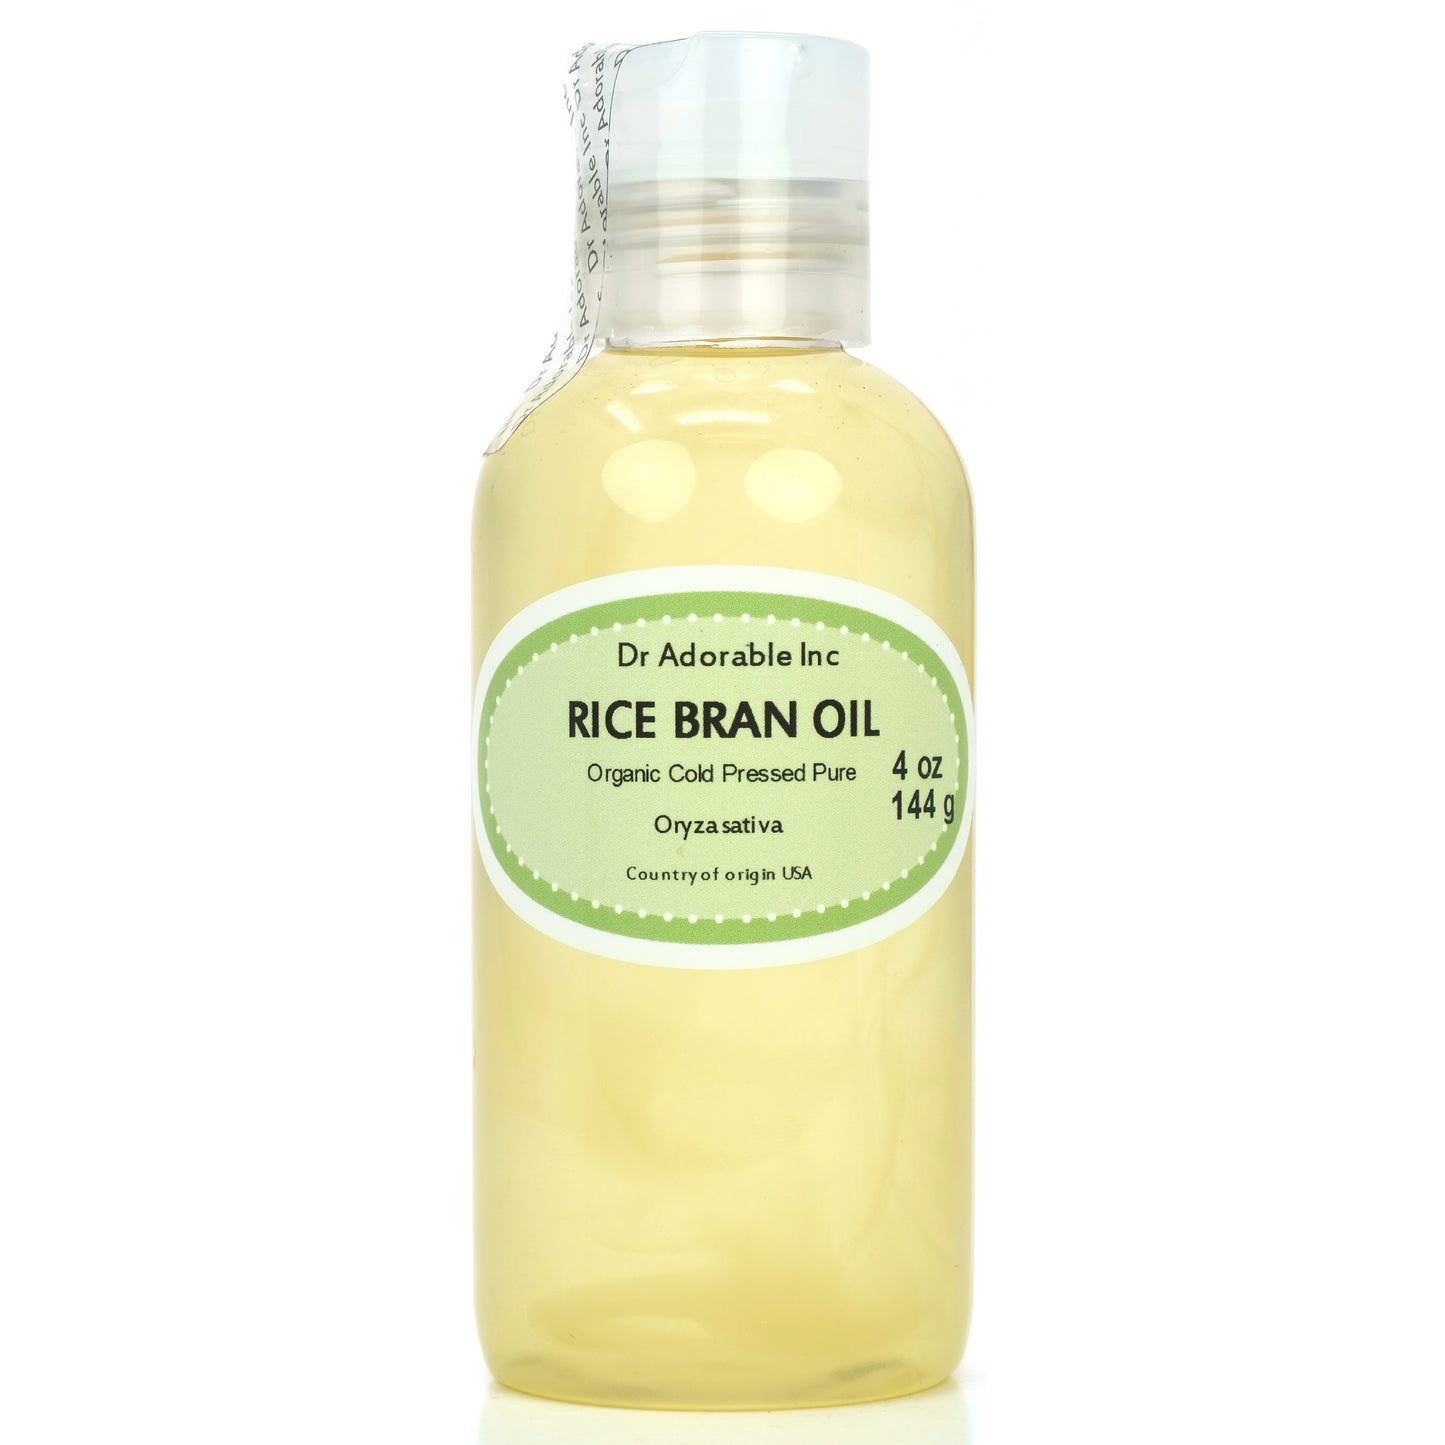 Rice Bran Oil - 100% Pure Natural Premium Organic Cold Pressed